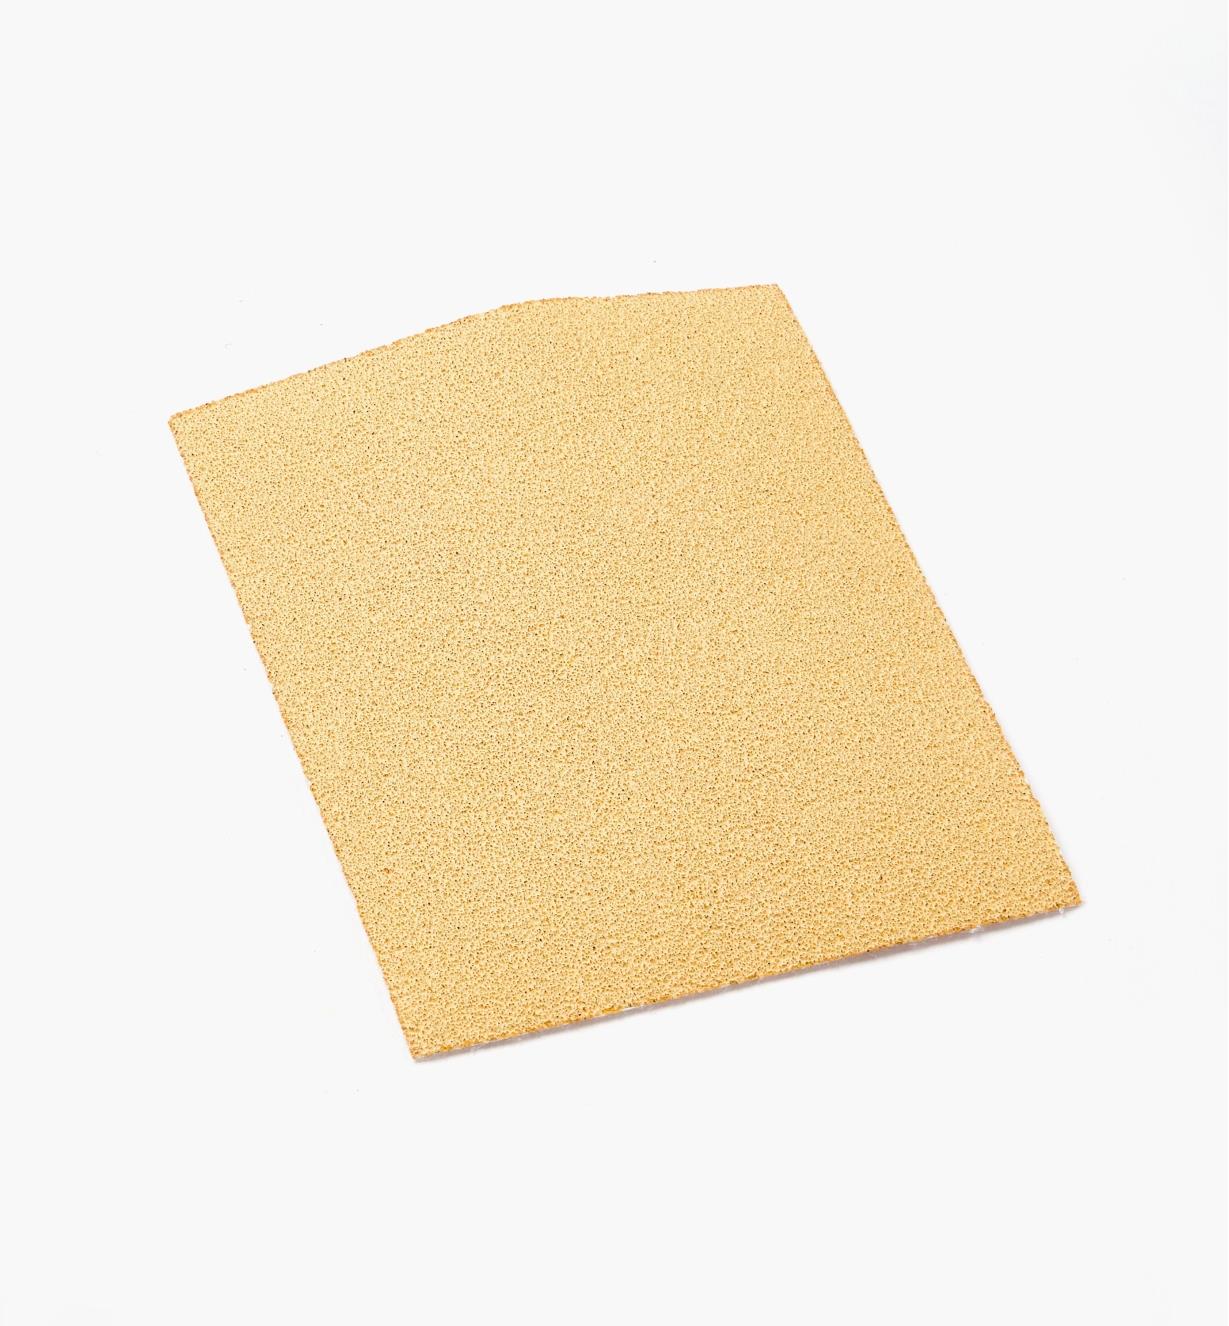 08K3451 - 80x Mirka Gold Grip Sheet, 3" × 4", ea.